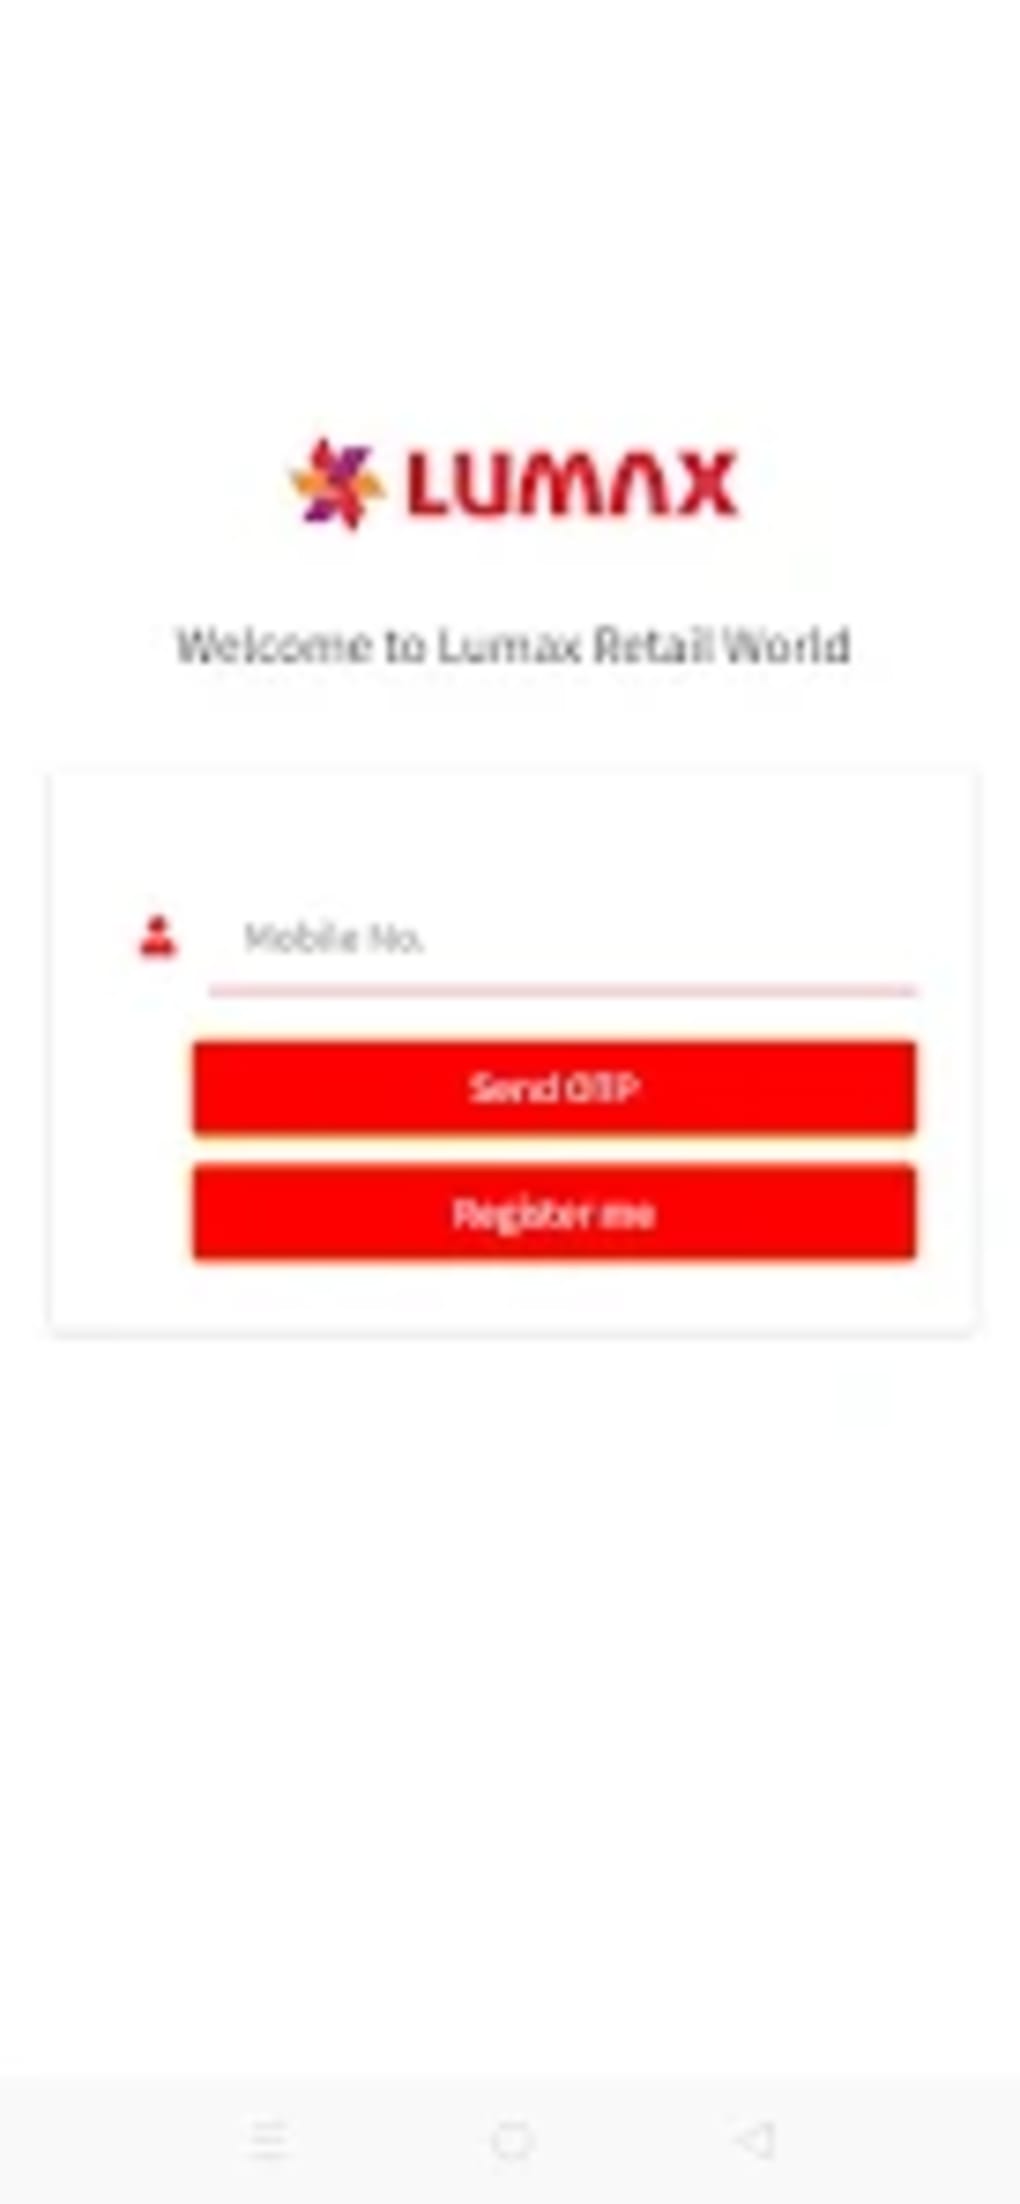 Matsuura's LUMEX Revolutionizes Manufacturing - YouTube